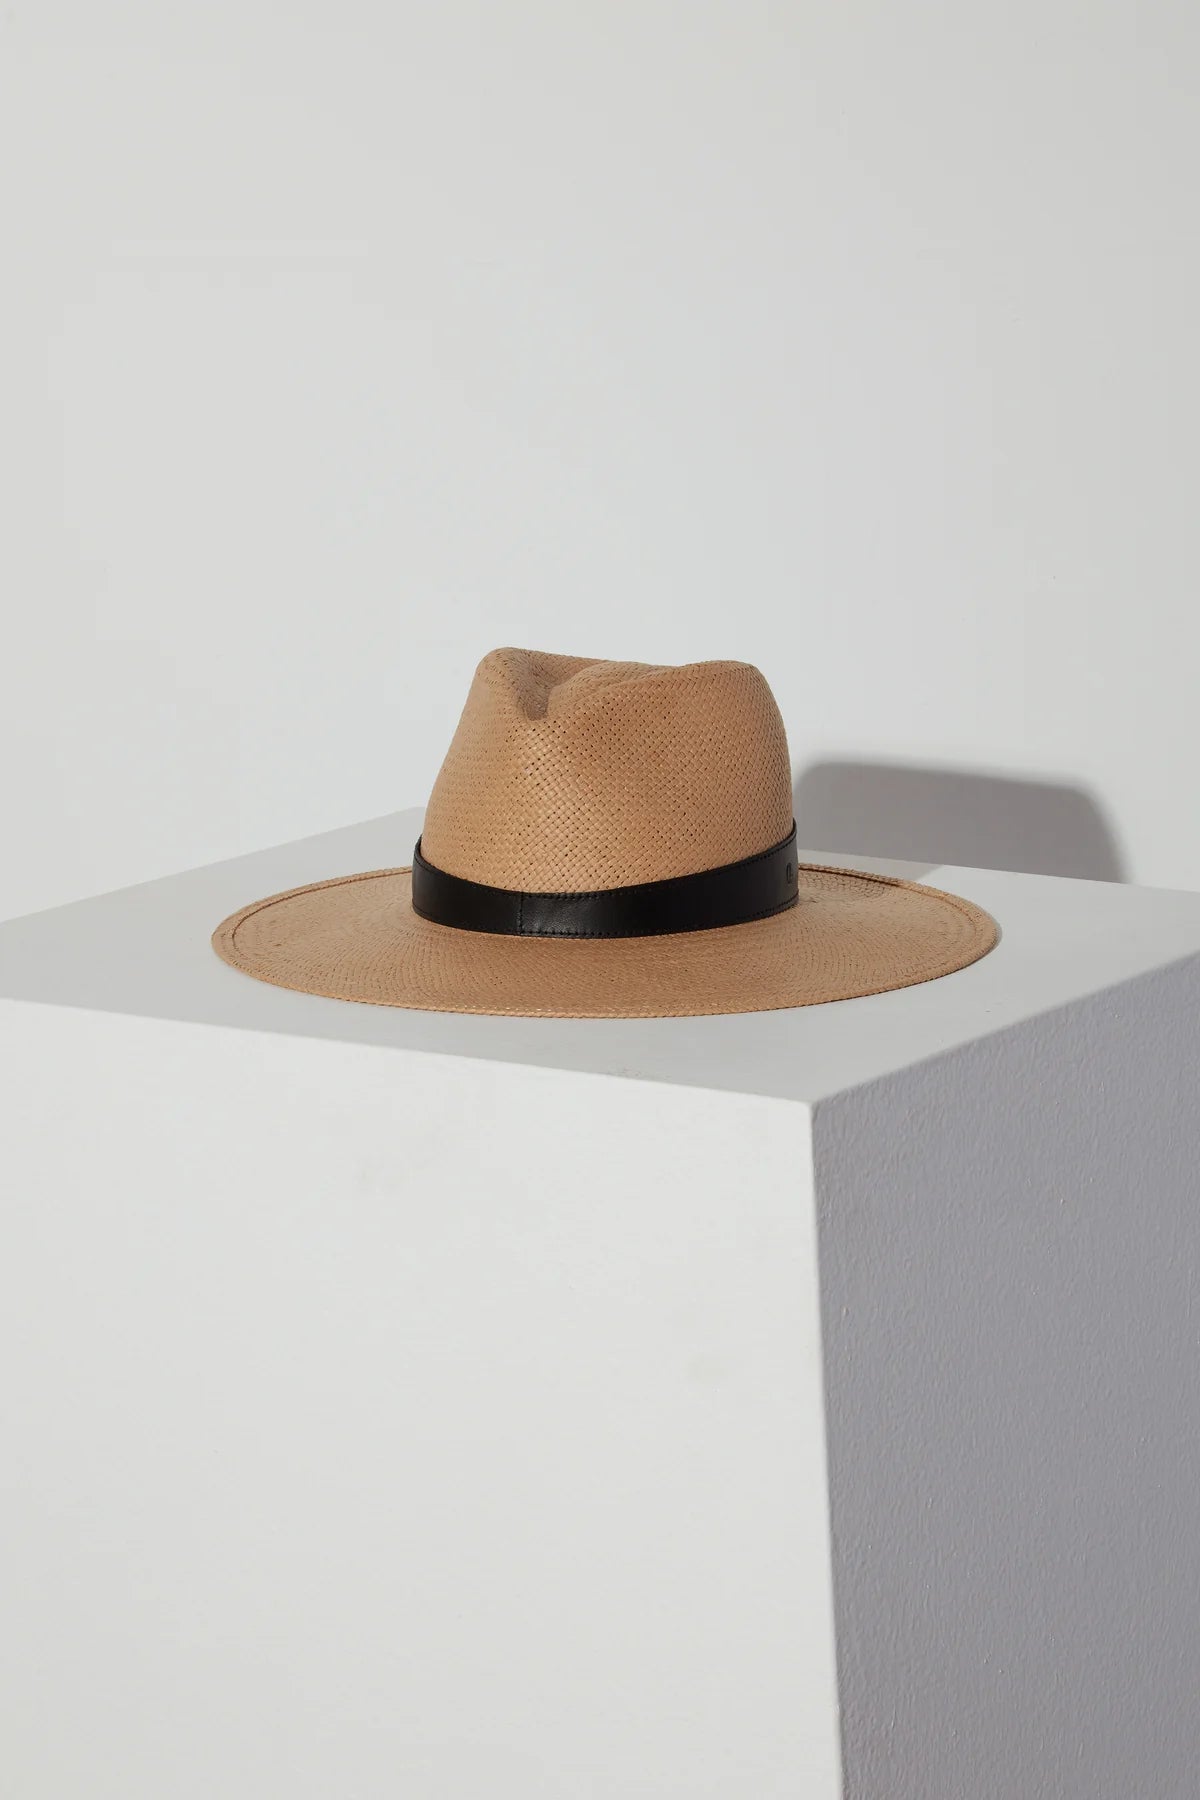 Savannah Packable Straw Hat